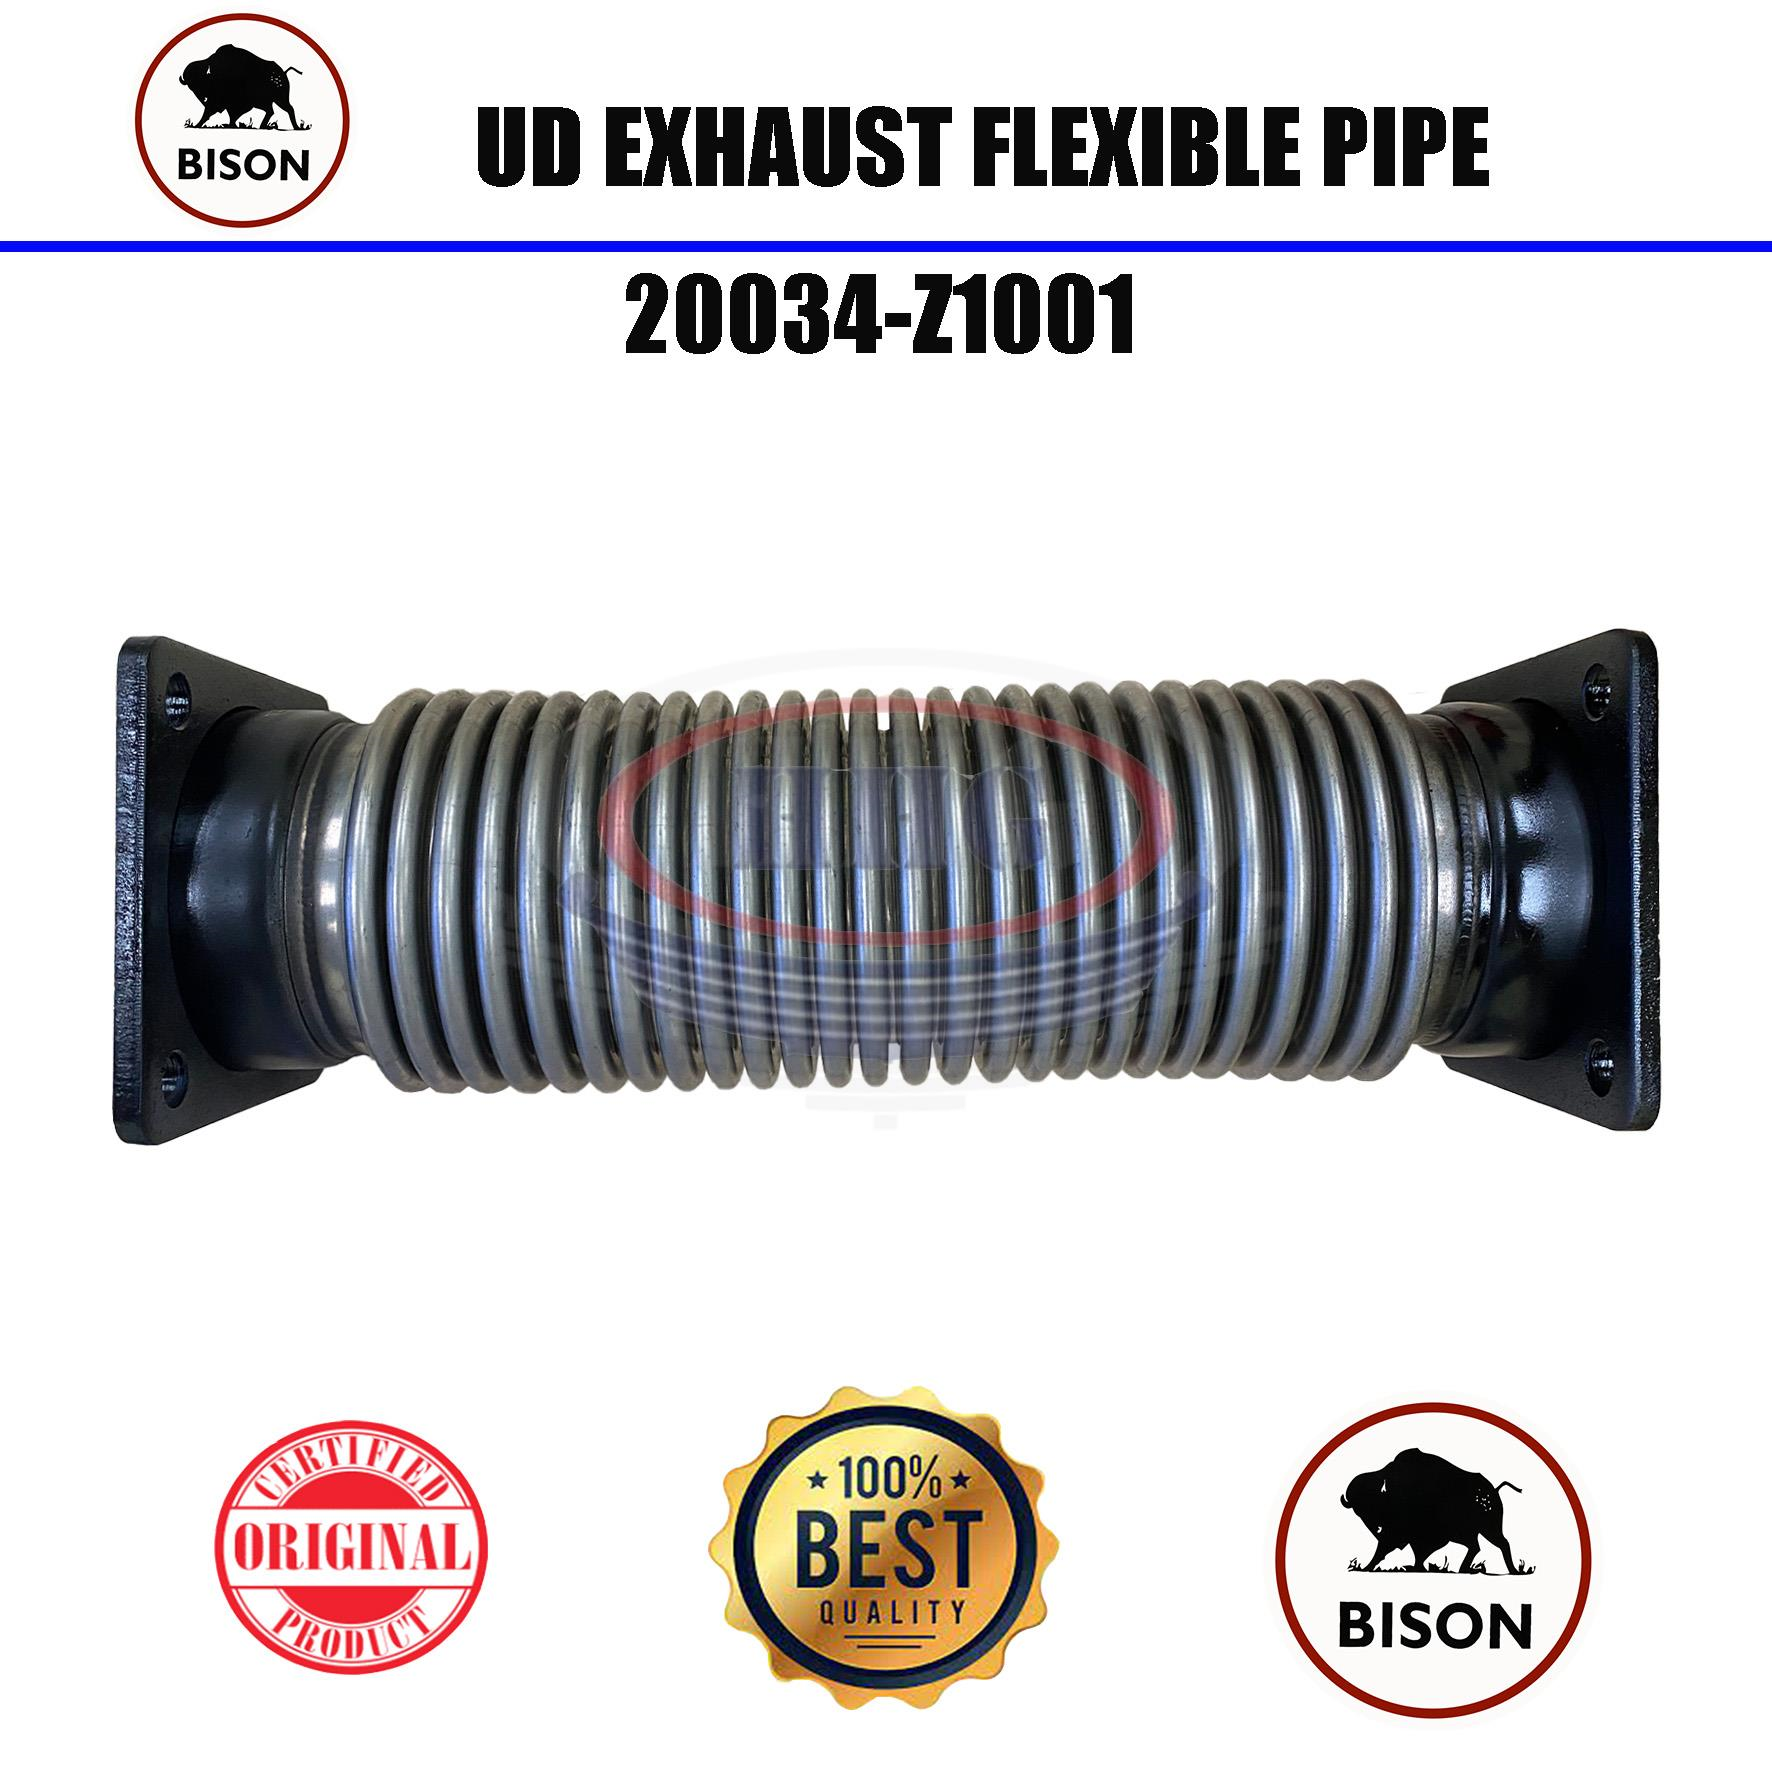 Bison Original UD CWB520 Exhaust Flexible Pipe (20034-Z1001)